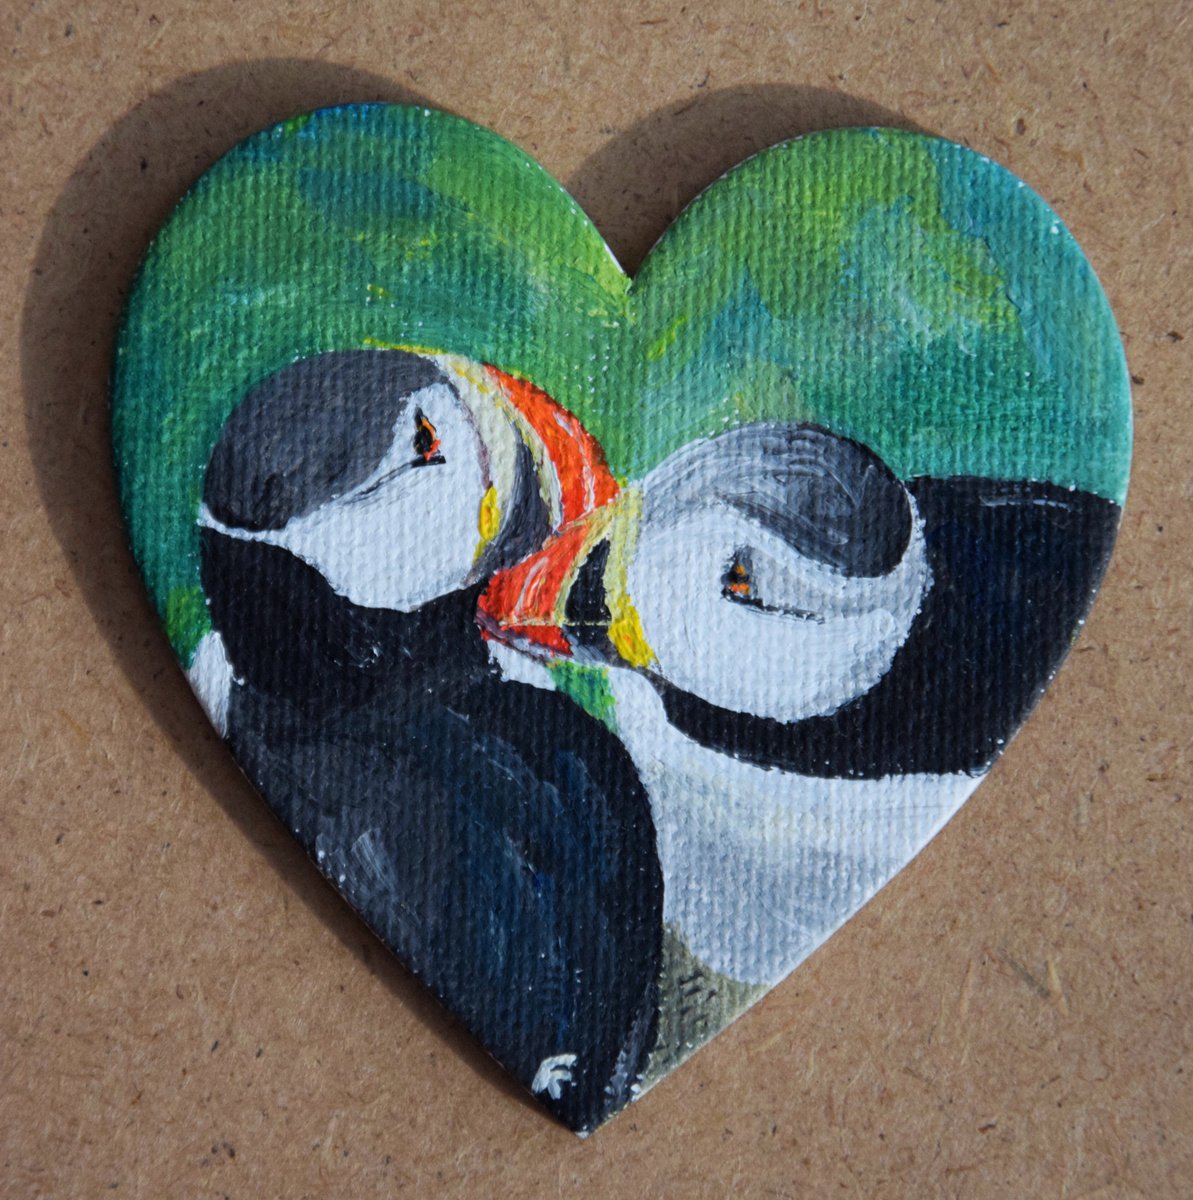 Puffins painting, heart magnet fridge, original acrylic painting, romantic gift by Kate Grishakova